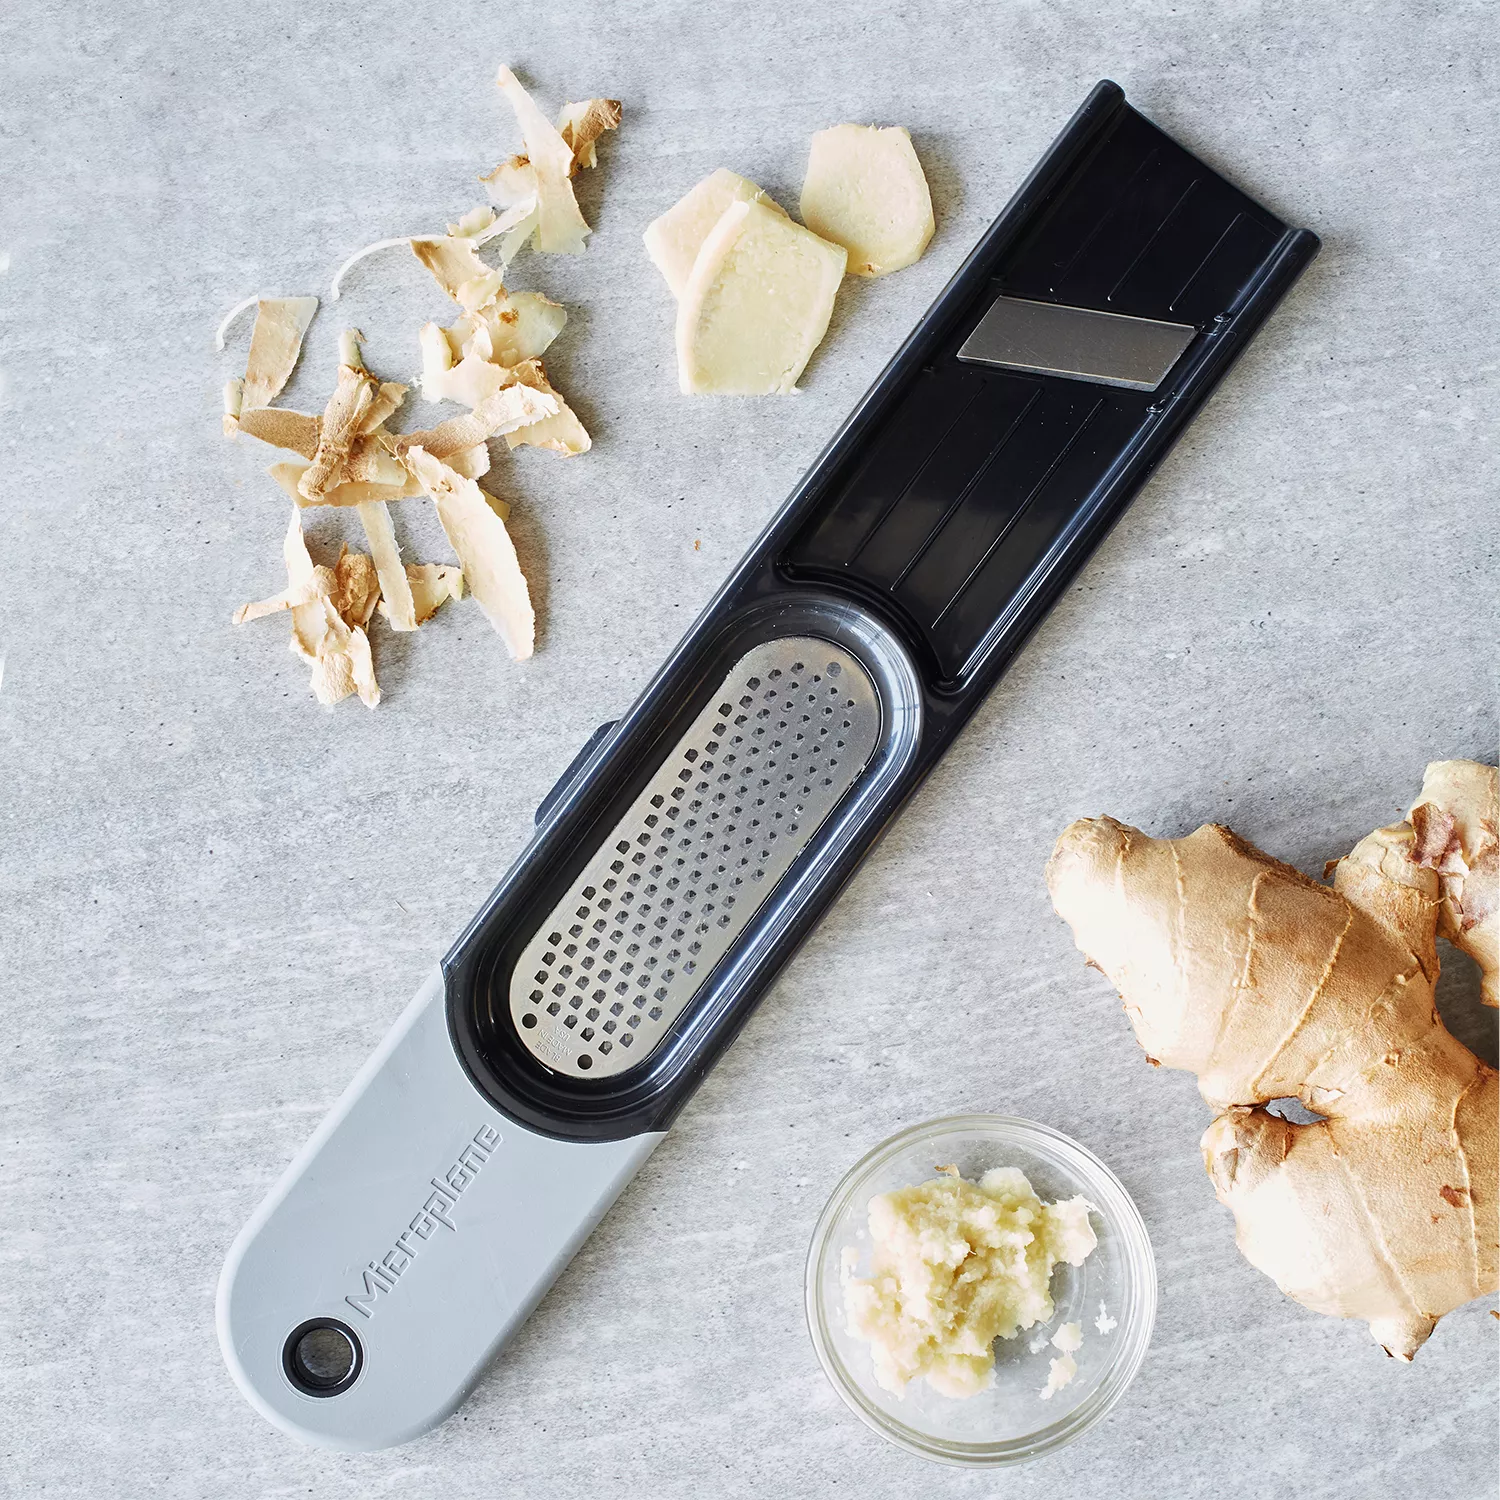 ginger tool: grates, slices & peels WAIT - Whisk